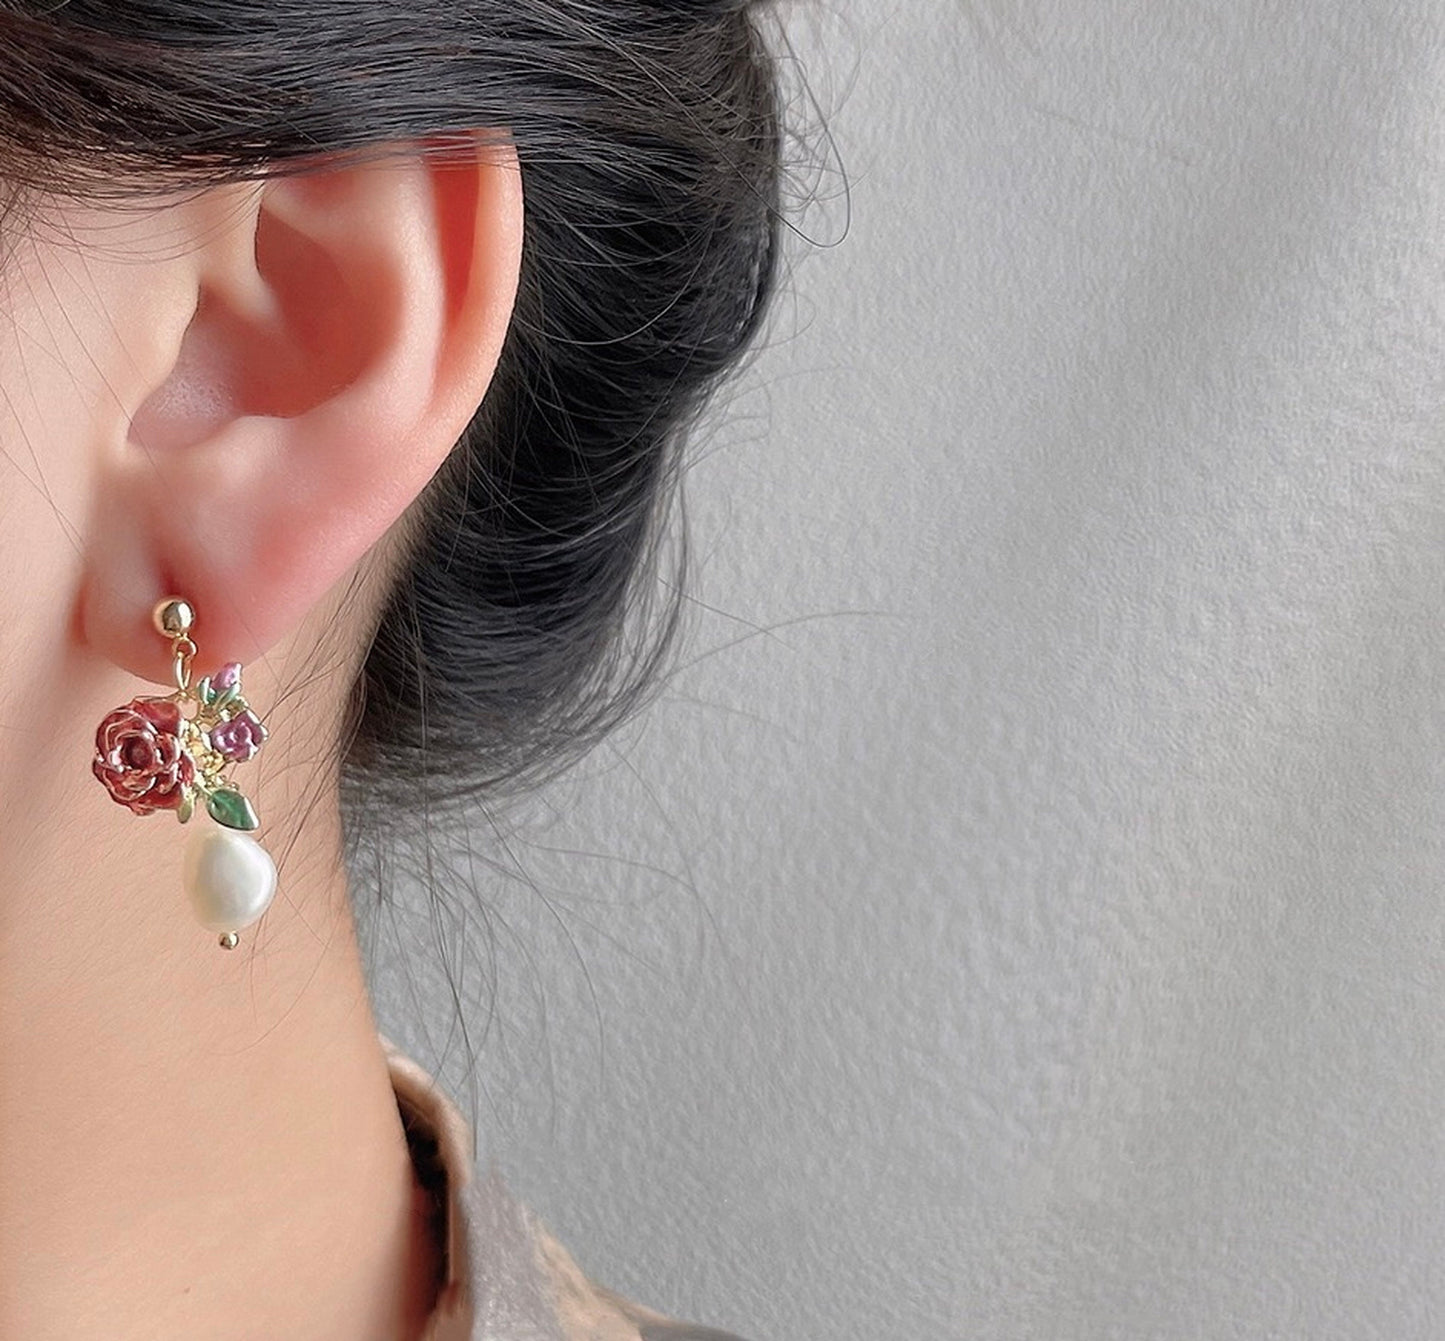 Pink Flower Earrings, Gold Bow Ribbon Earrings, Mismatched Earrings, Natural Pearl Dangly Earrings, Rose Earrings, Fairy Earrings, Cute Gift